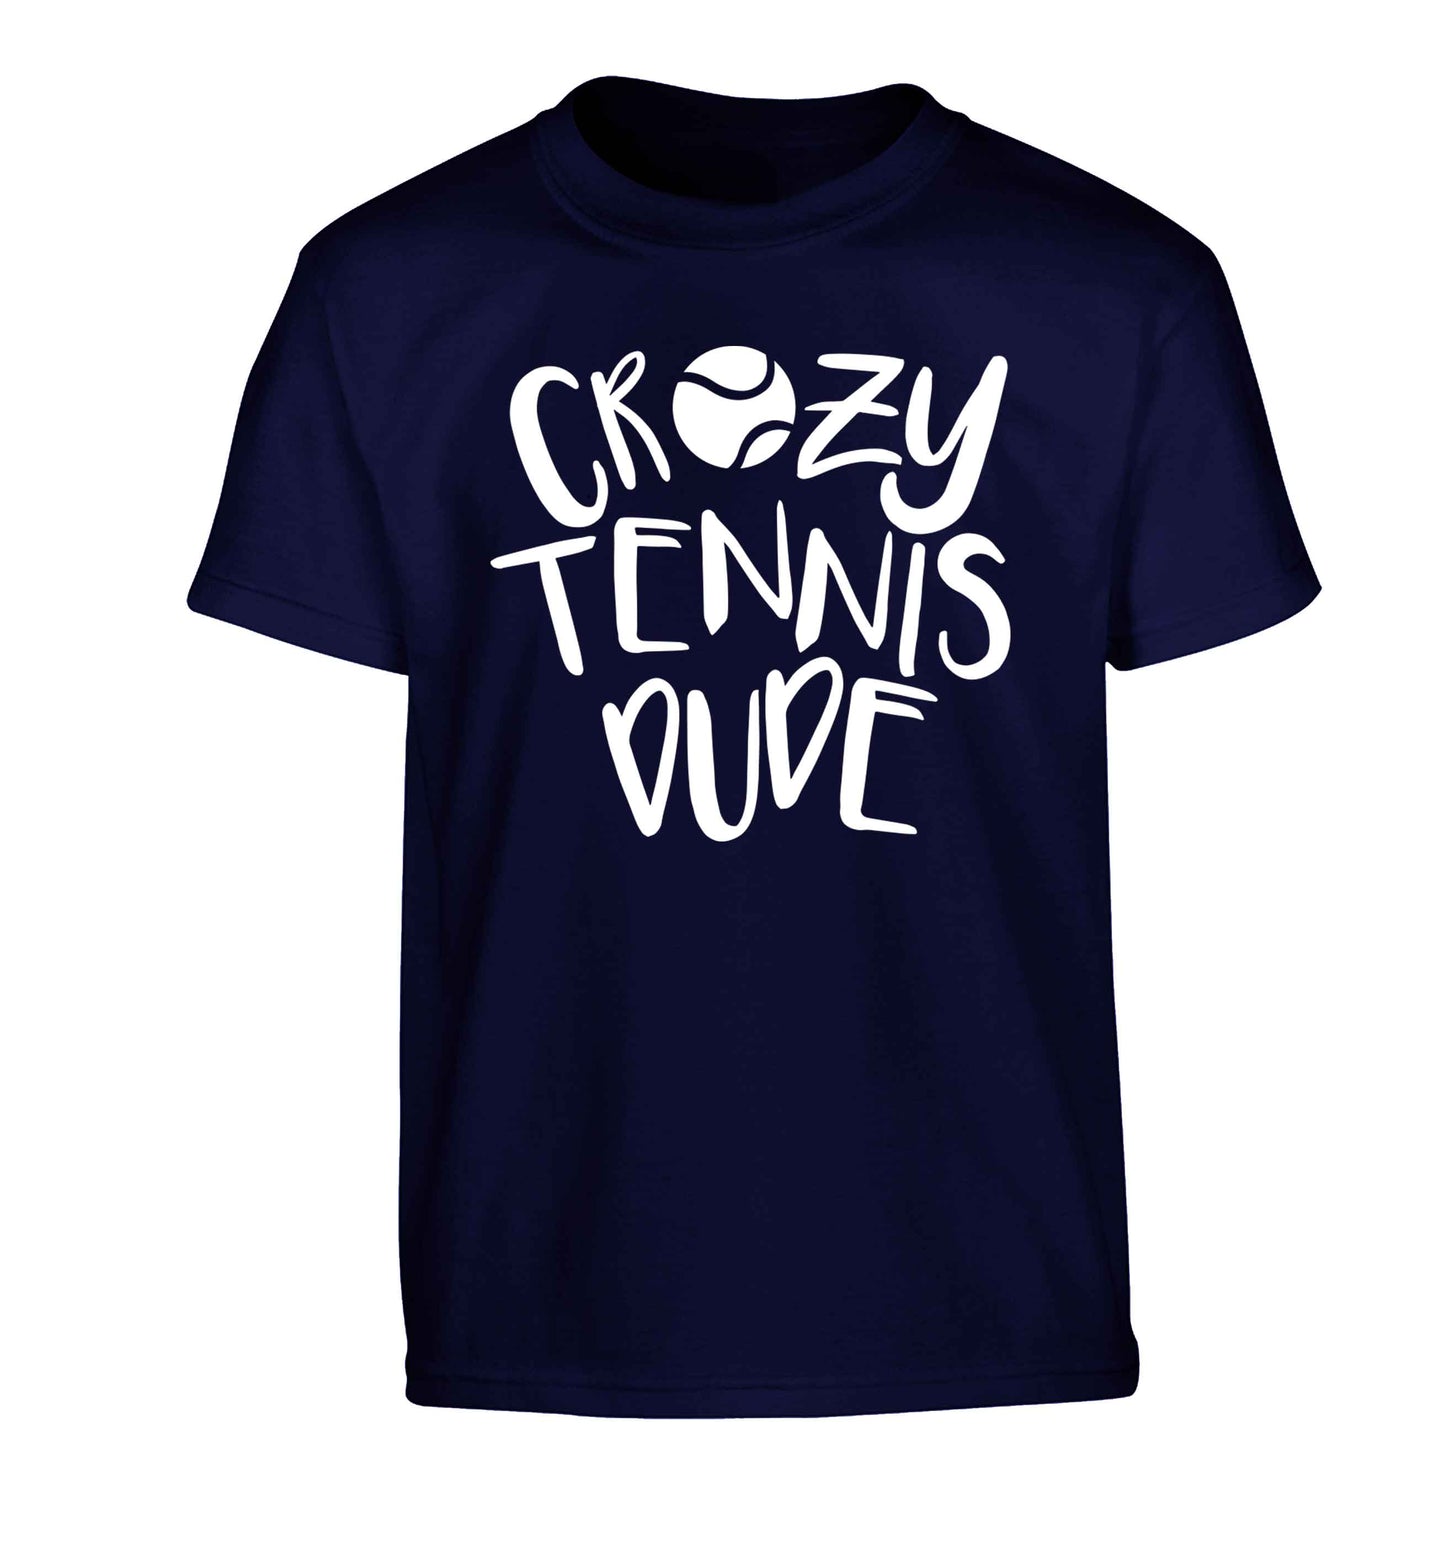 Crazy tennis dude Children's navy Tshirt 12-13 Years